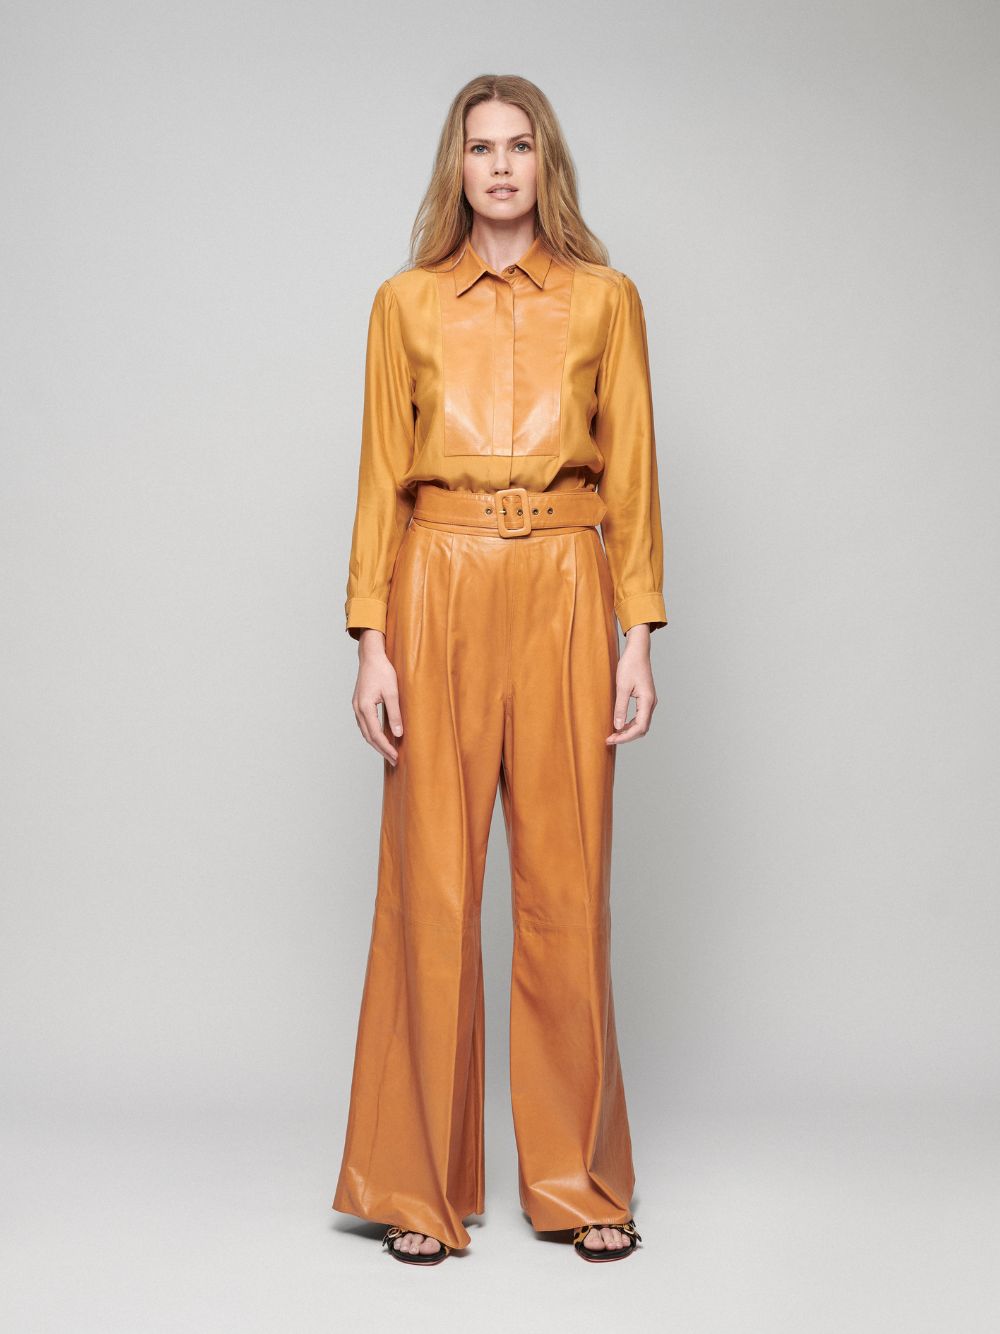 PaulaCosmos Silk Shirt with Leather Bib at Fashion Clinic